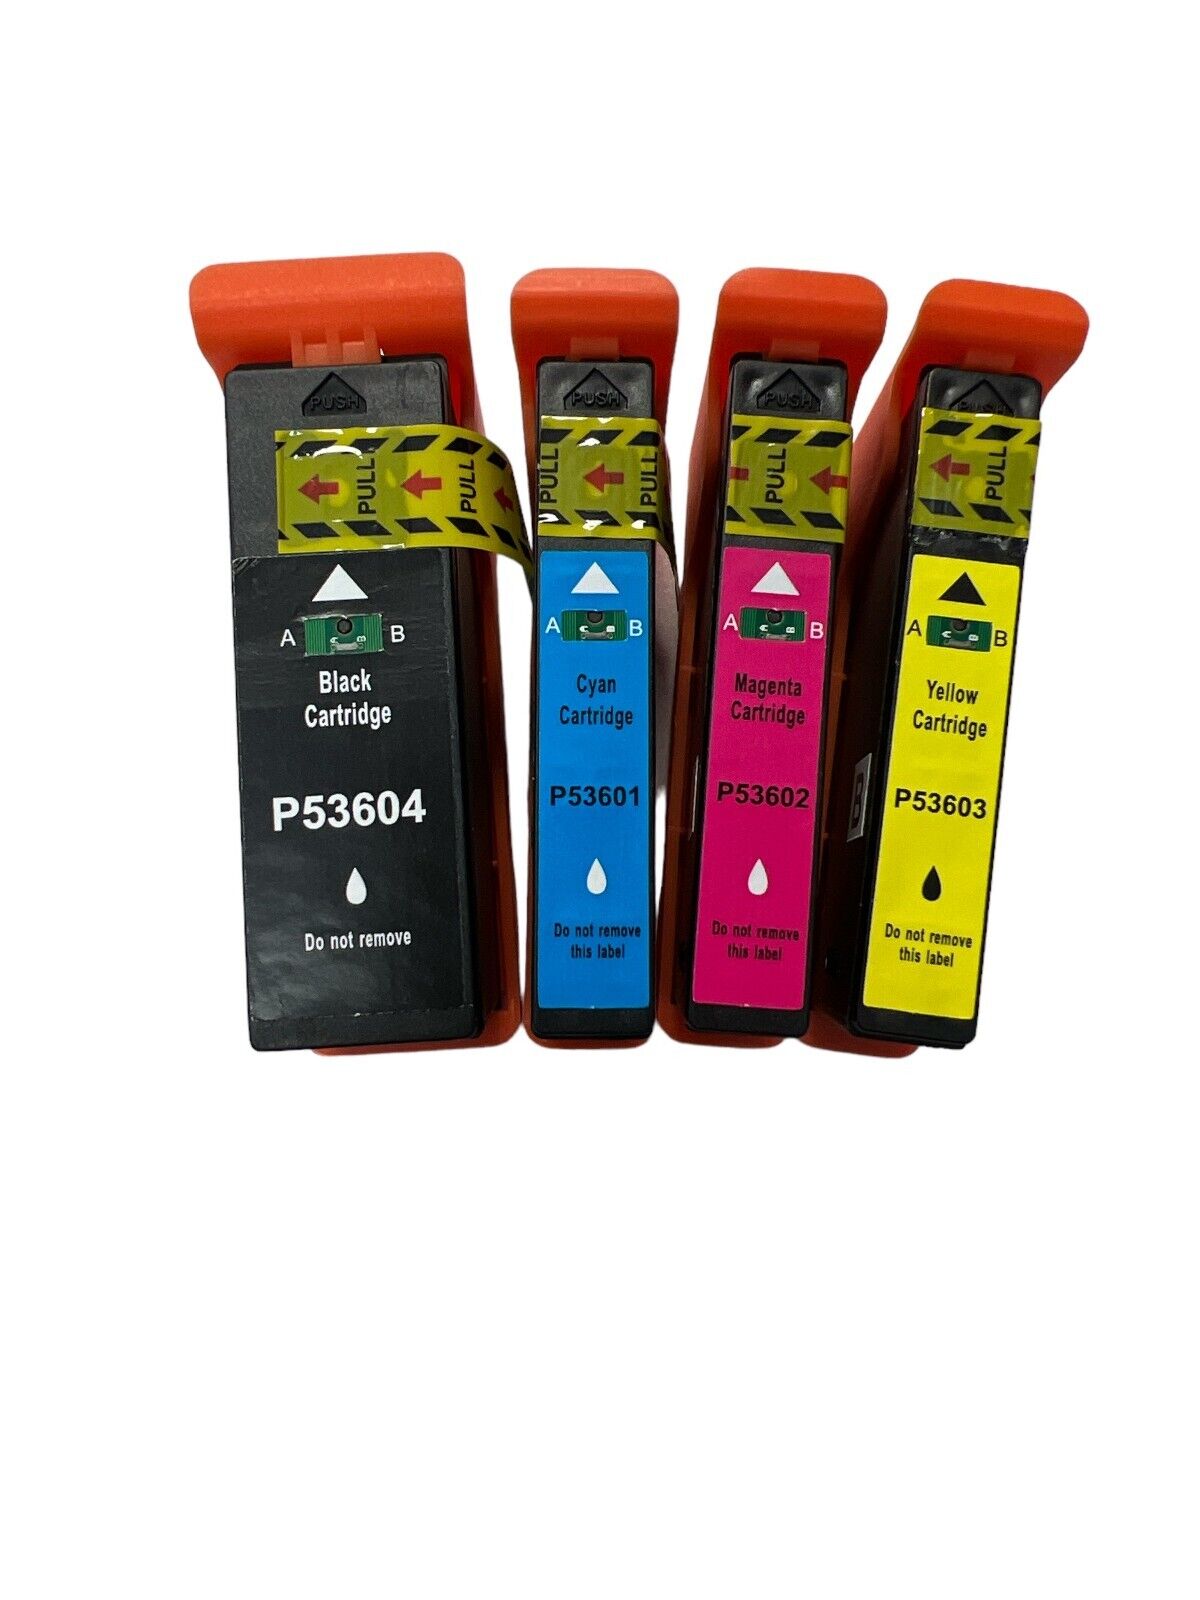 53601-53604 Compatible Ink Cartridge for Primera Bravo 4100 Series Printer -4pk